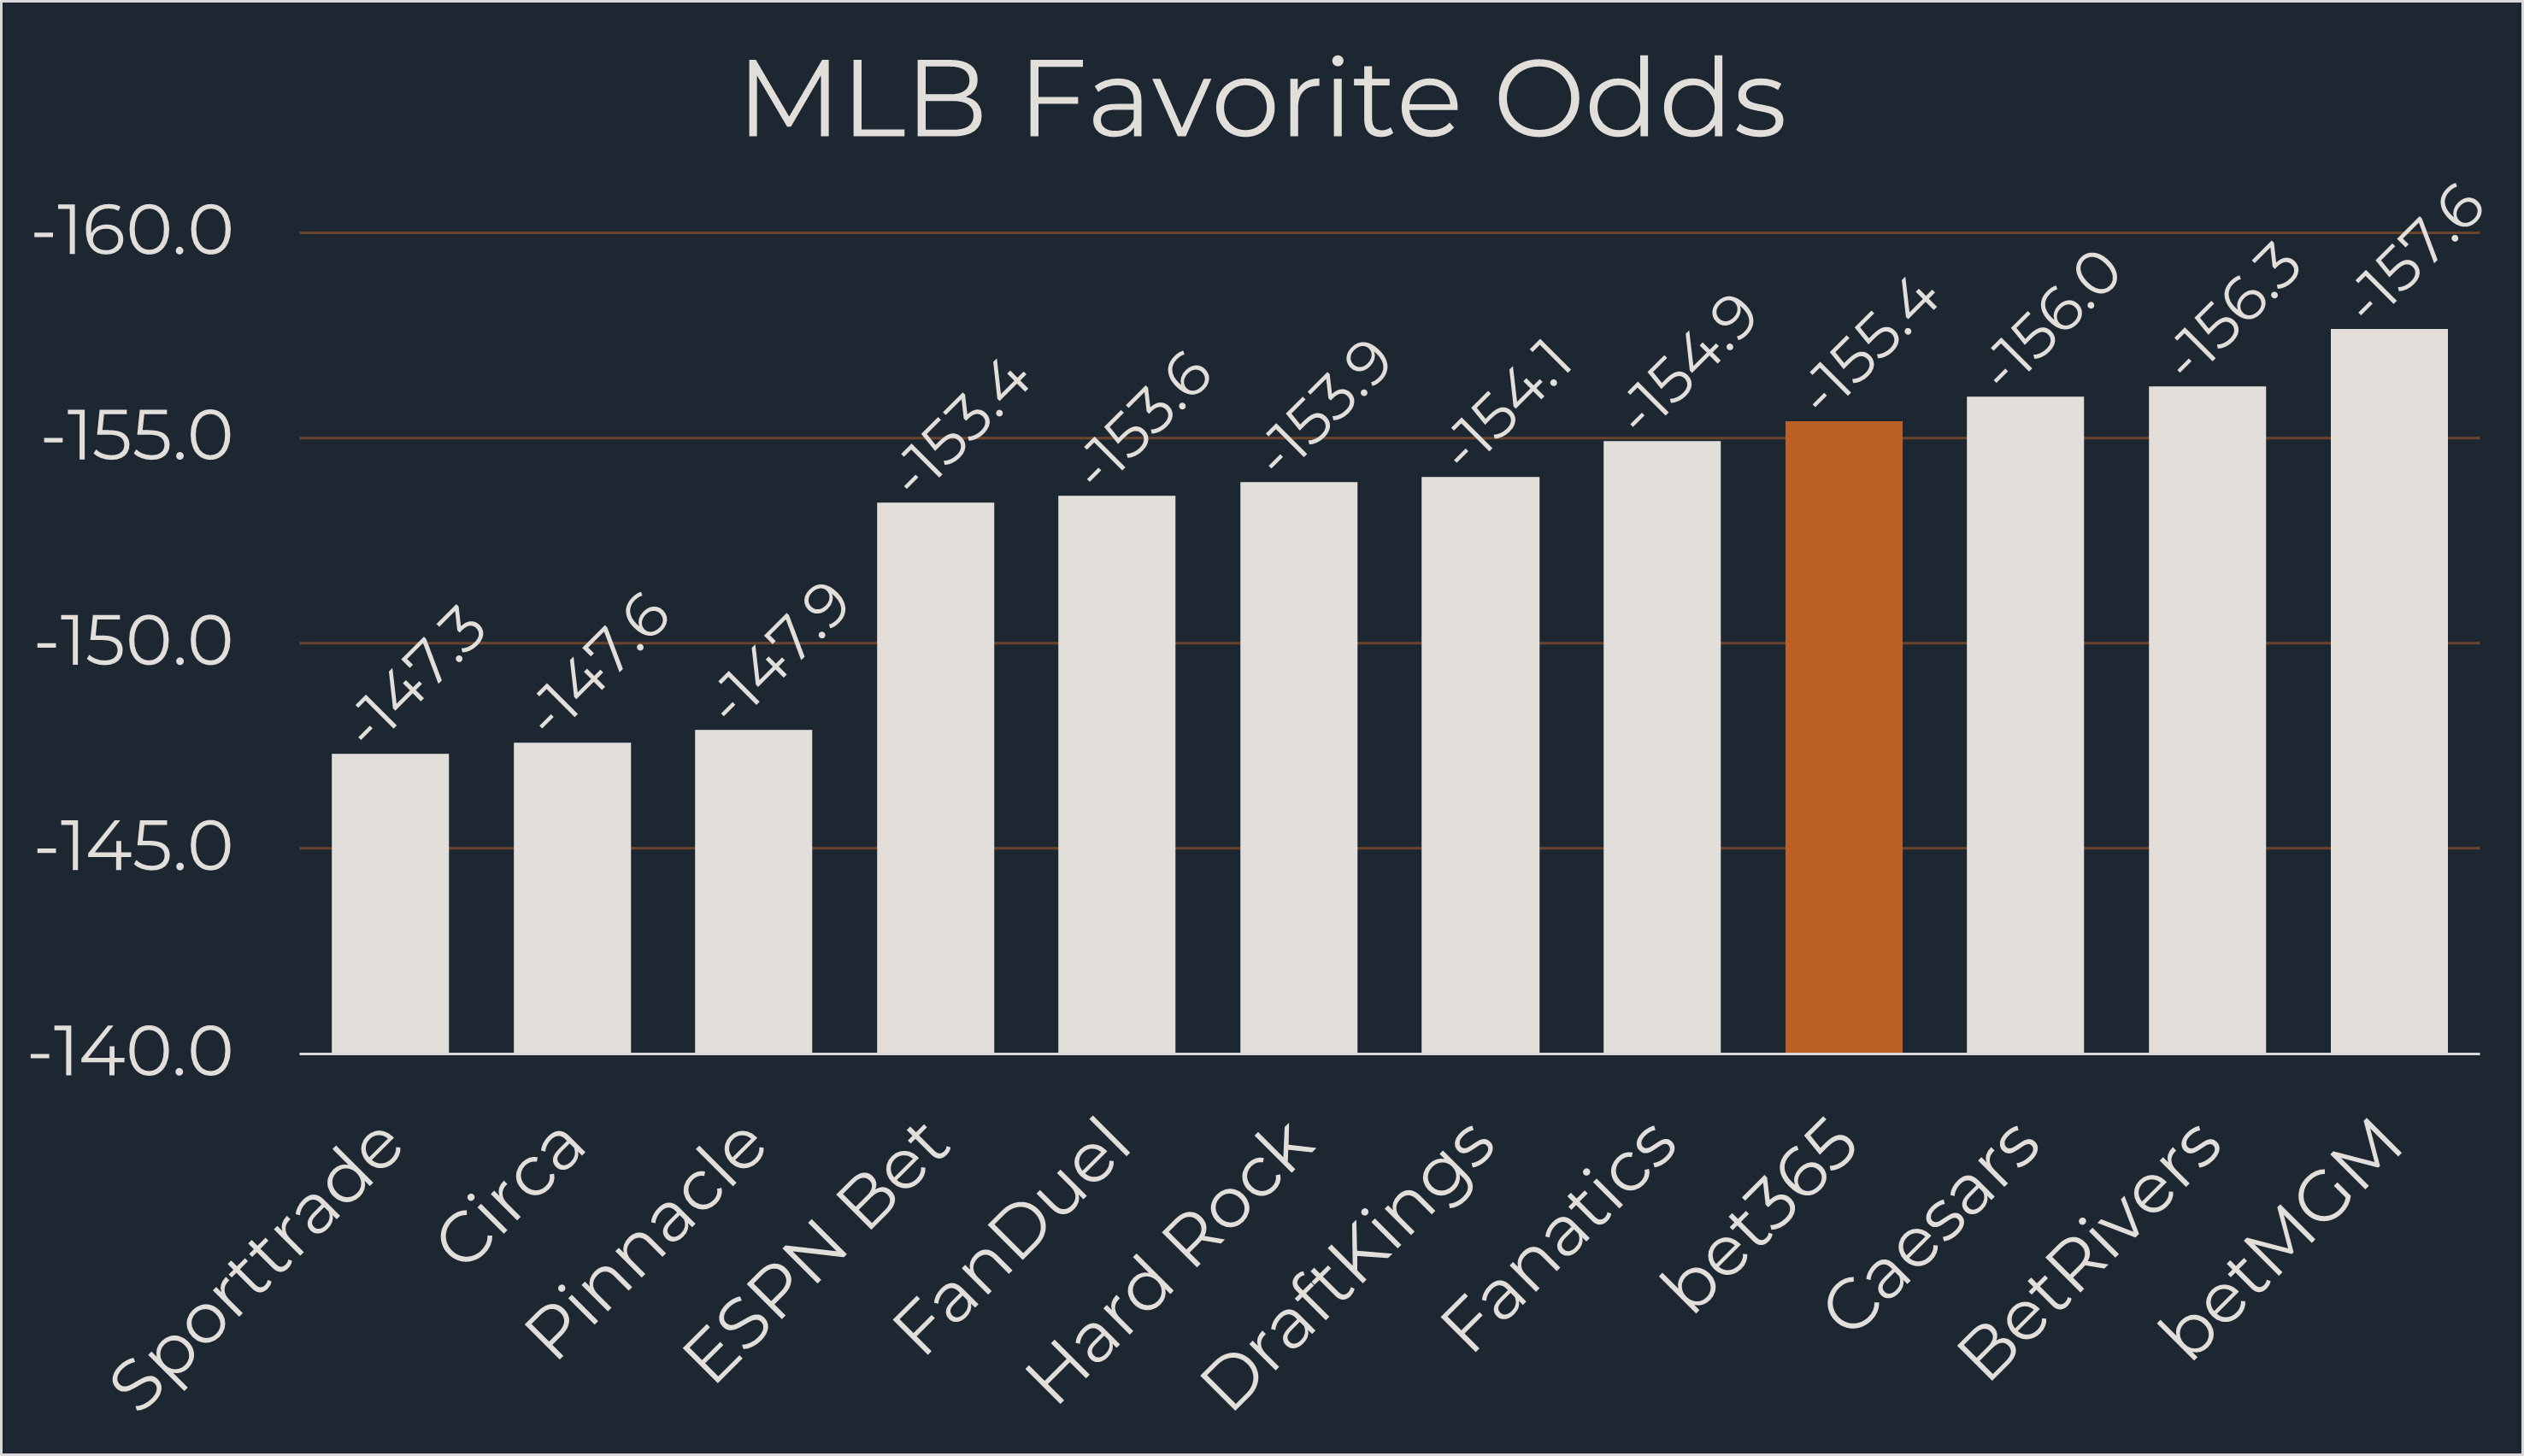 bet365 MLB Odds comparison chart